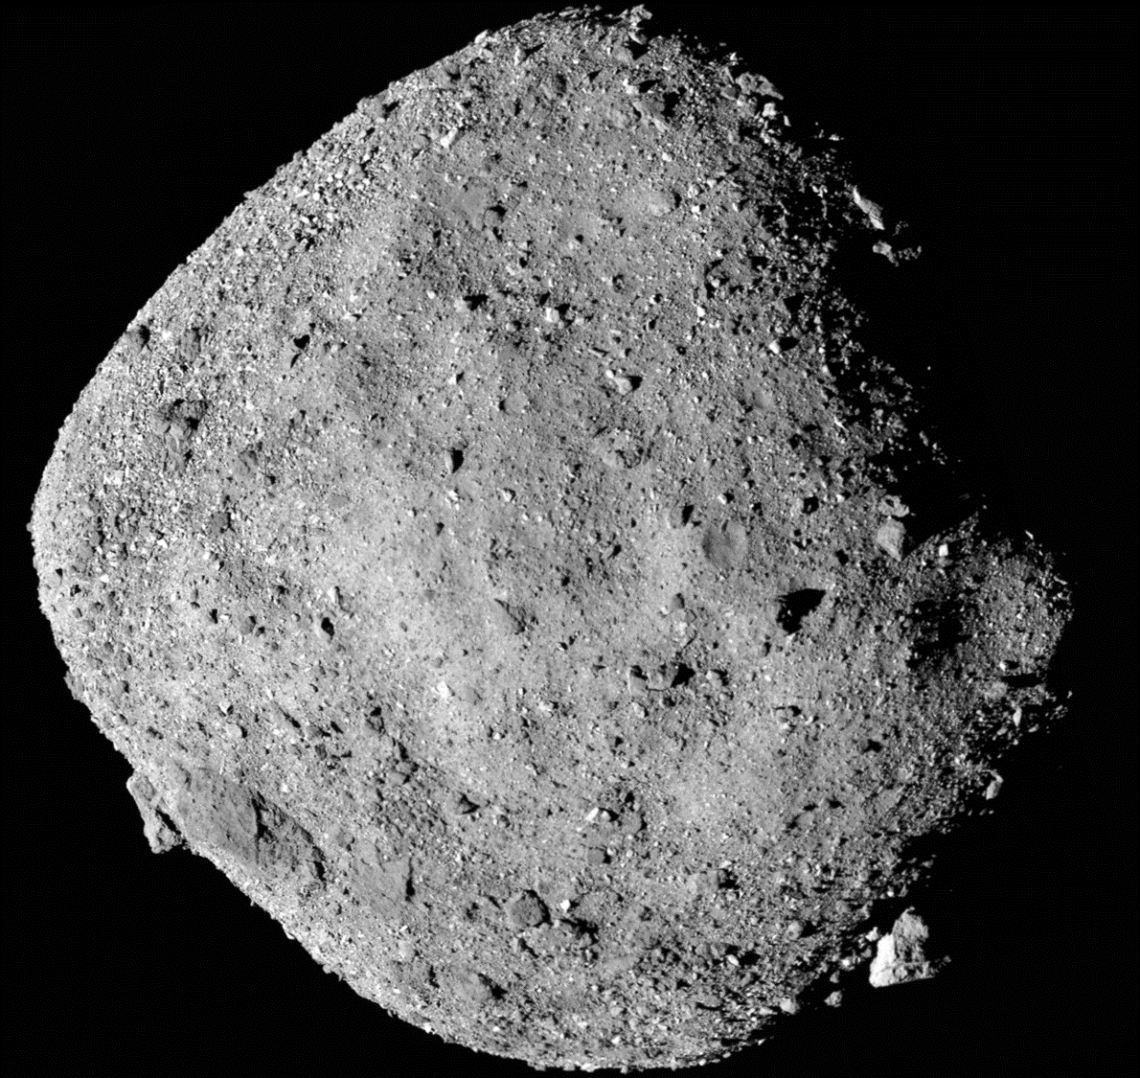 Asteroid Bennu as seen by the OSIRIS-REx spacecraft in 2018